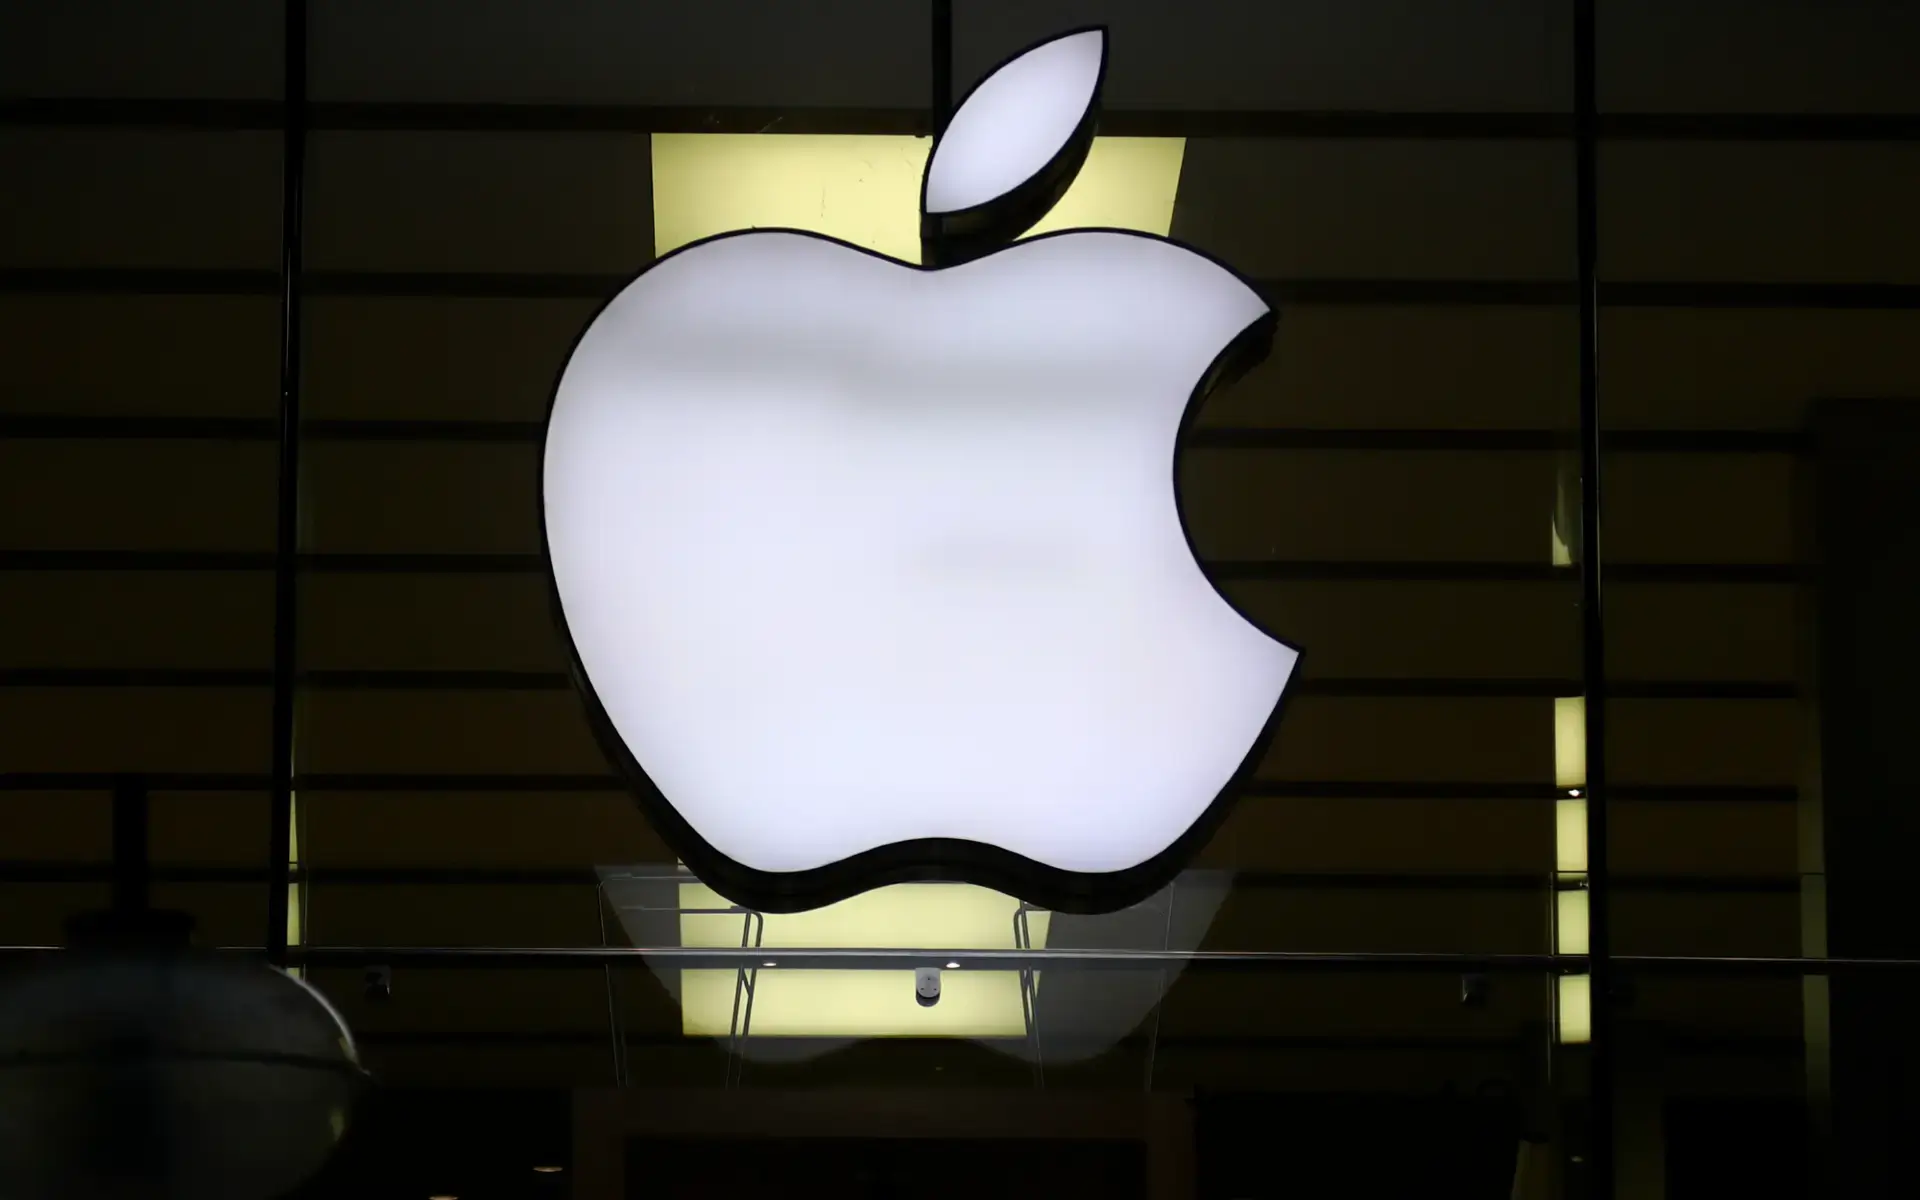 DOJ says Apple is using unfair tactics to maintain monopoly on smartphone market